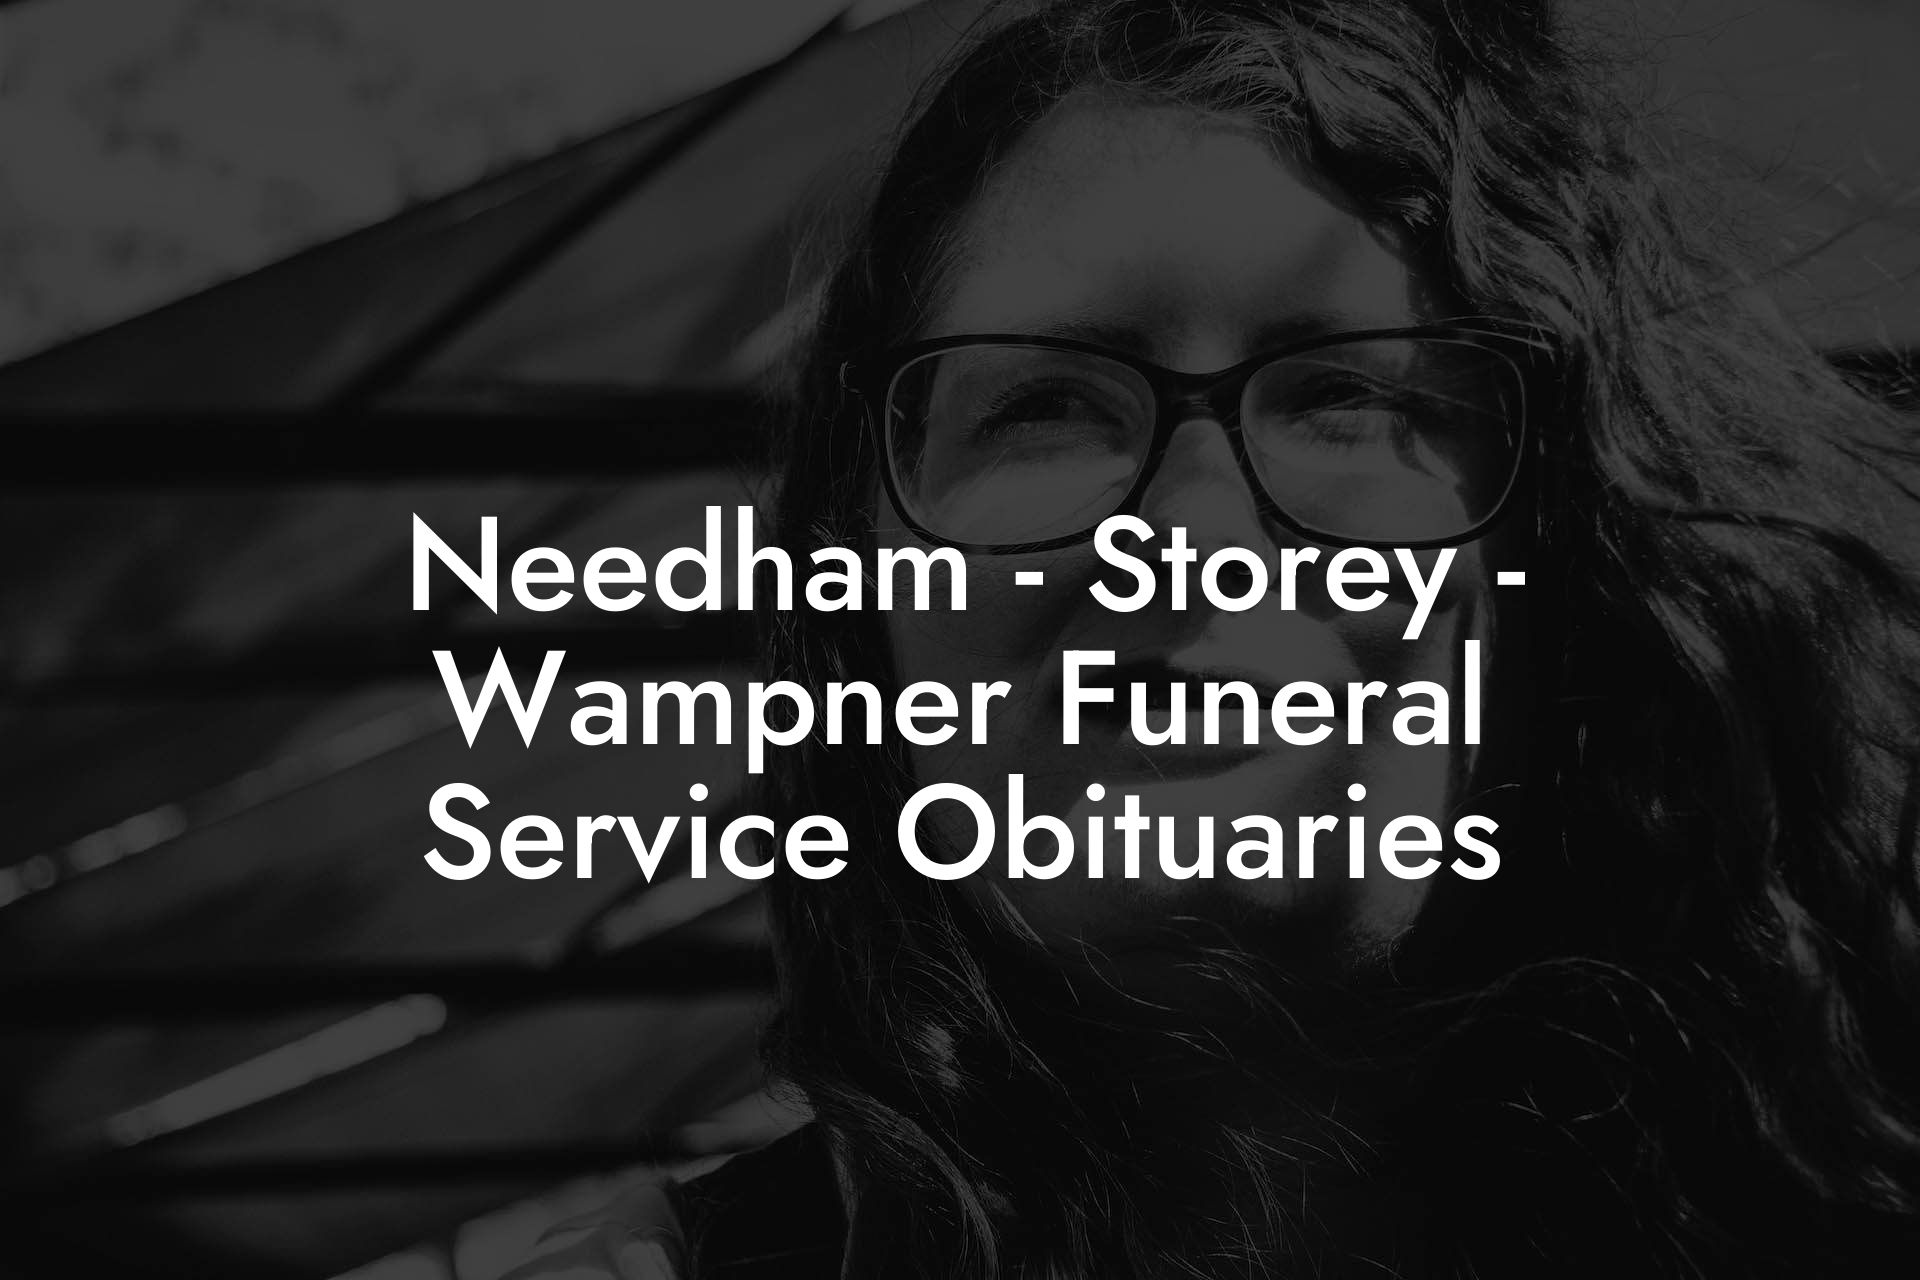 Needham - Storey - Wampner Funeral Service Obituaries